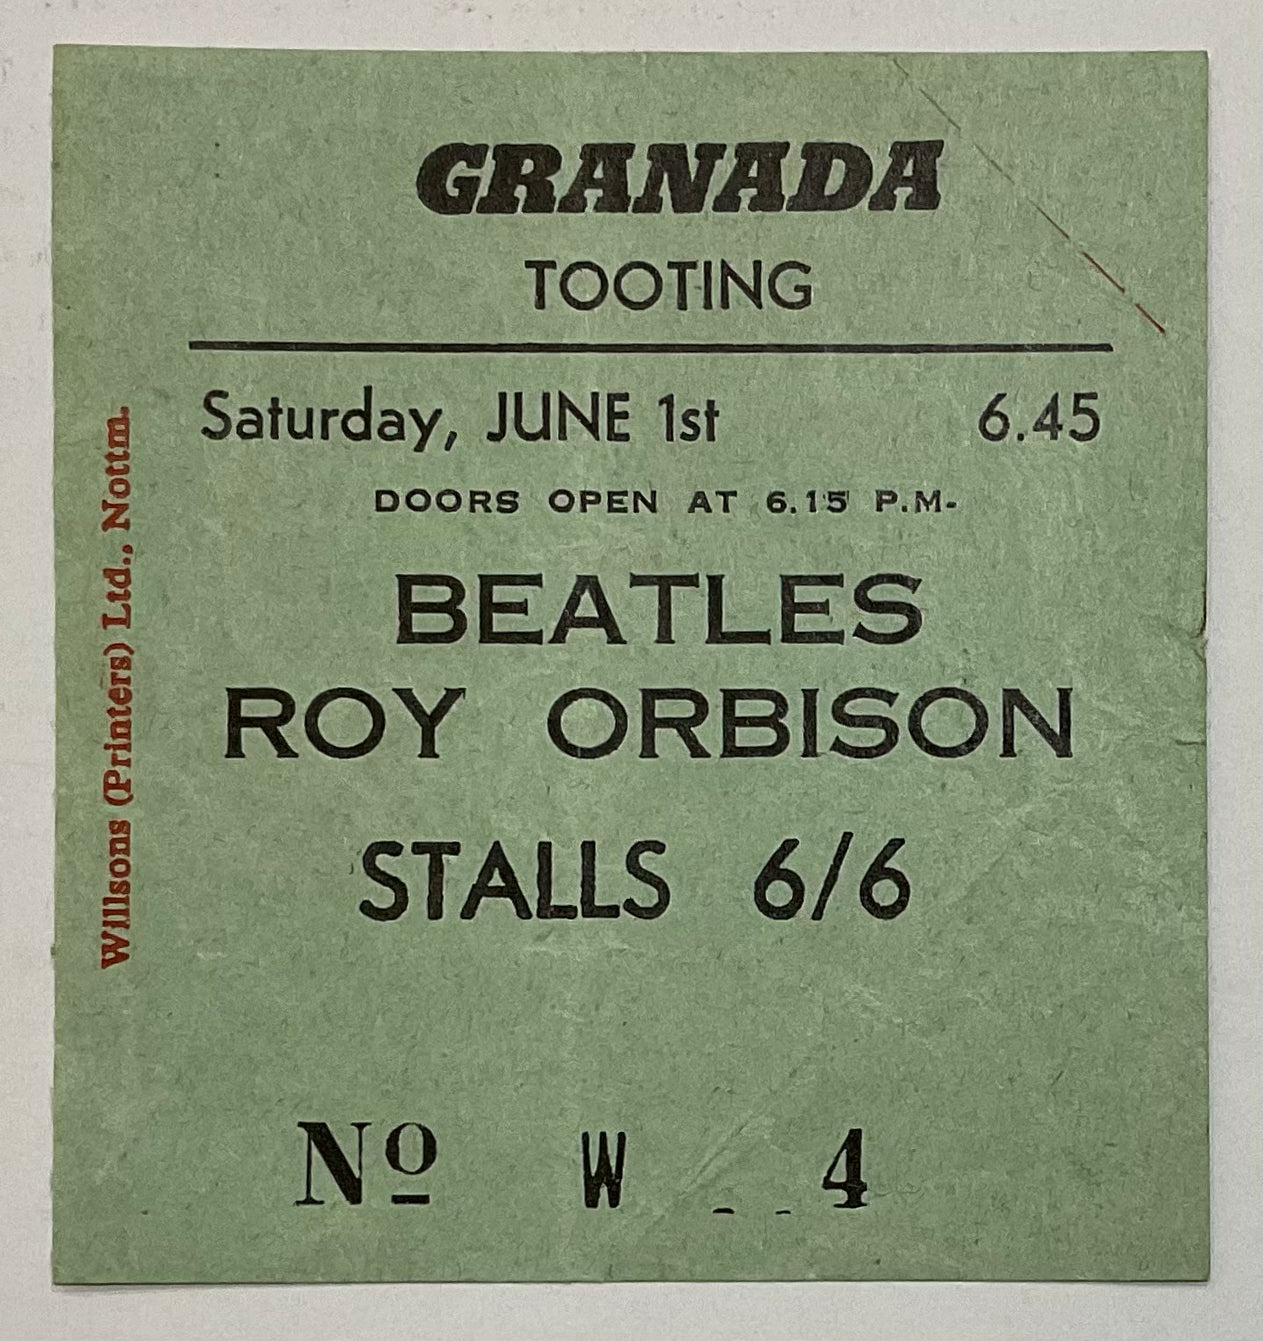 Beatles Original Used Concert Ticket Granada Theatre Tooting 1st Jun 1963